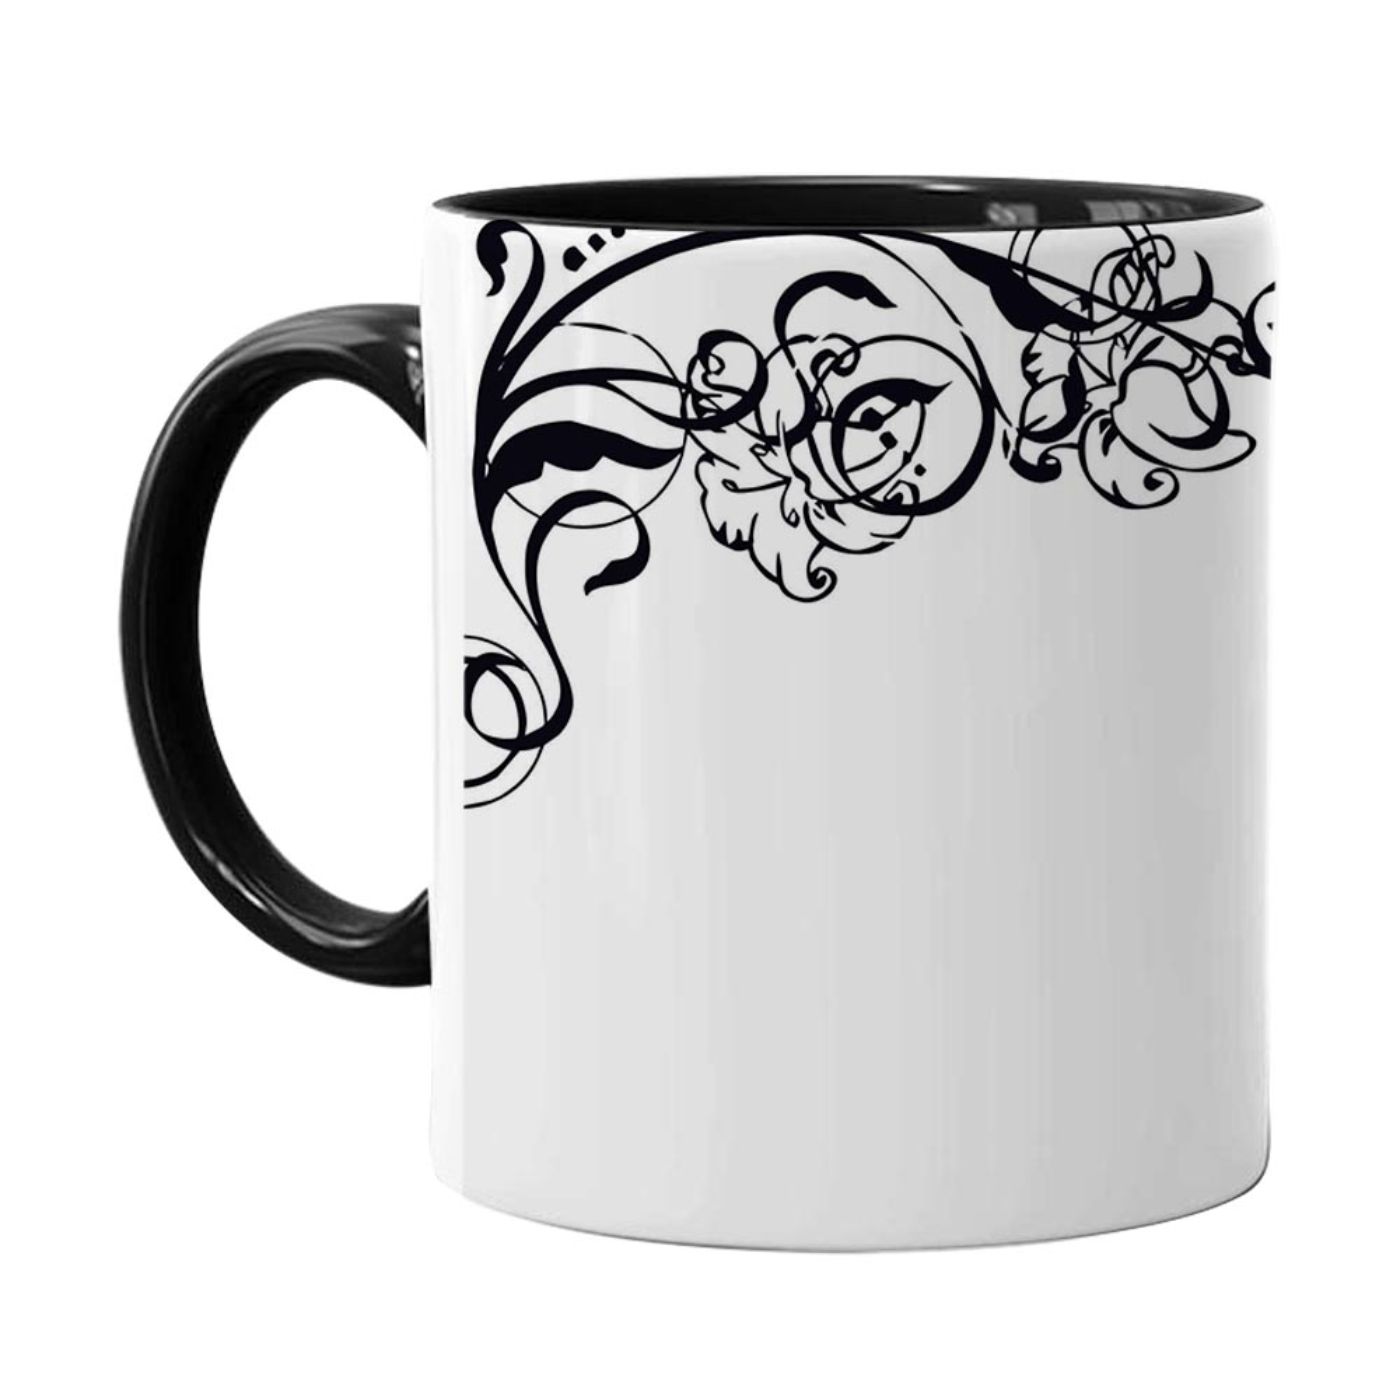 ORKA Digital Printed Theme 53 Coffee Mug  